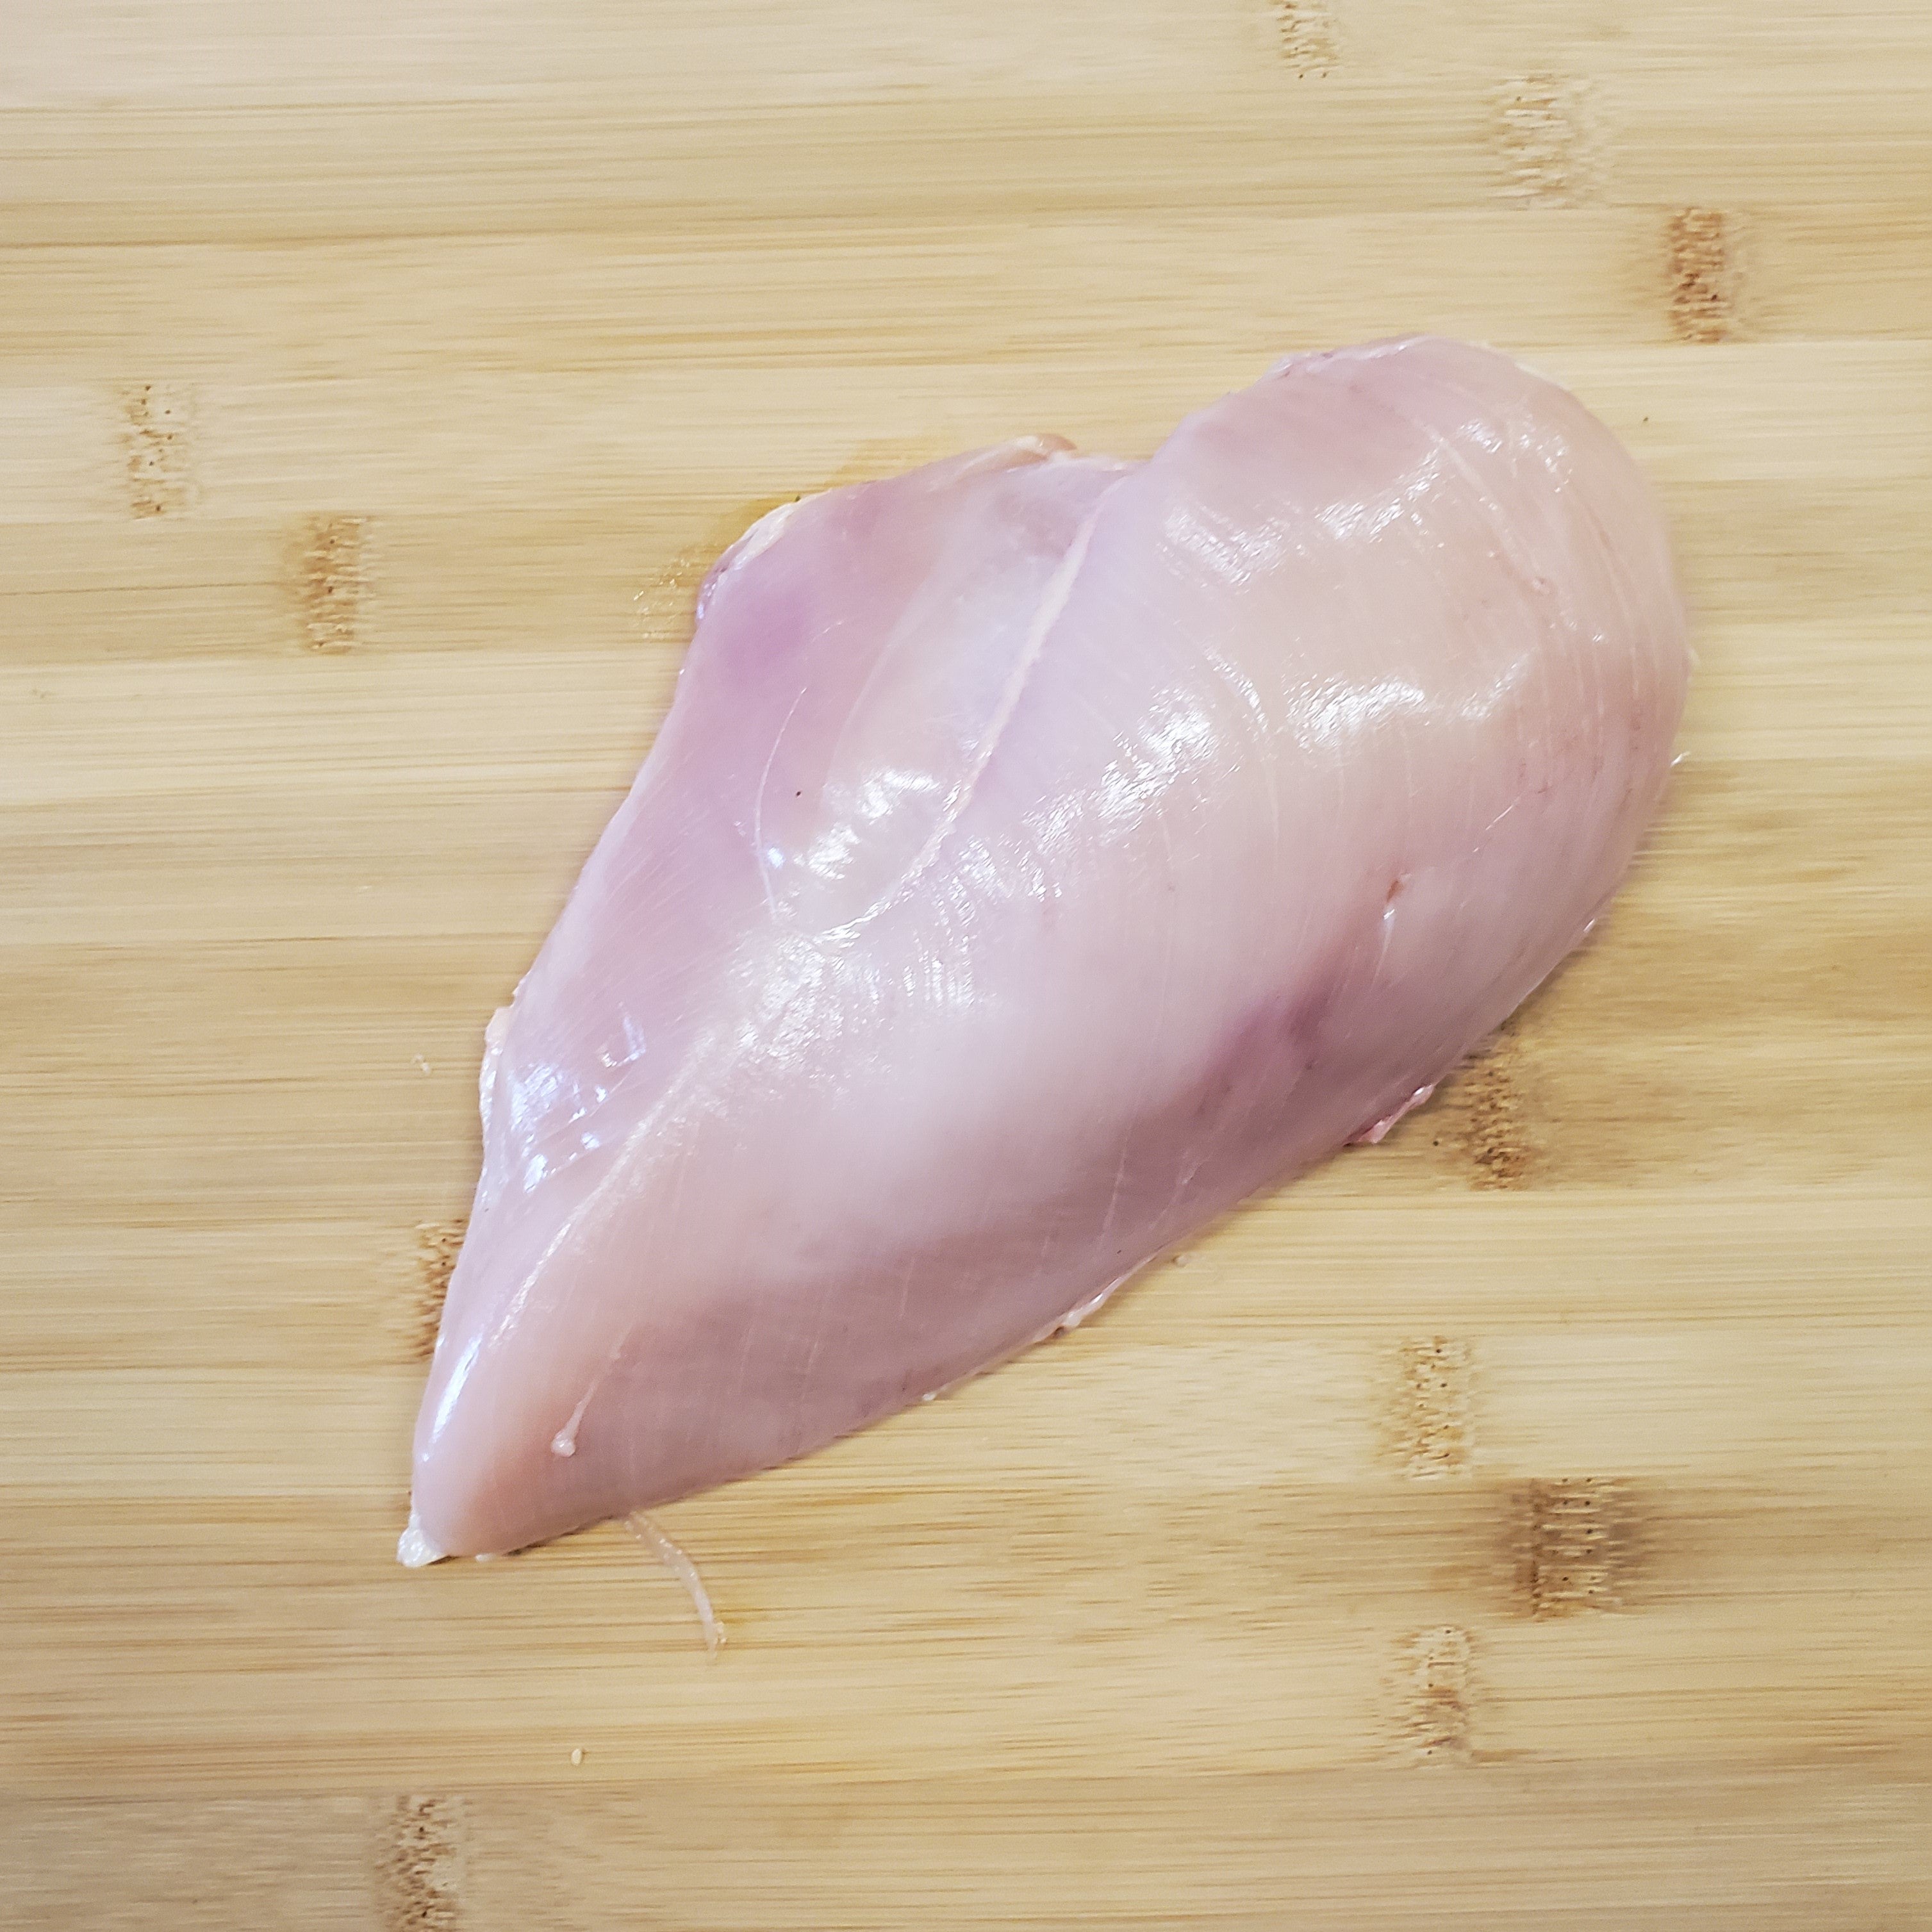 Skinles Boneless Air-Chilled Chicken Breast